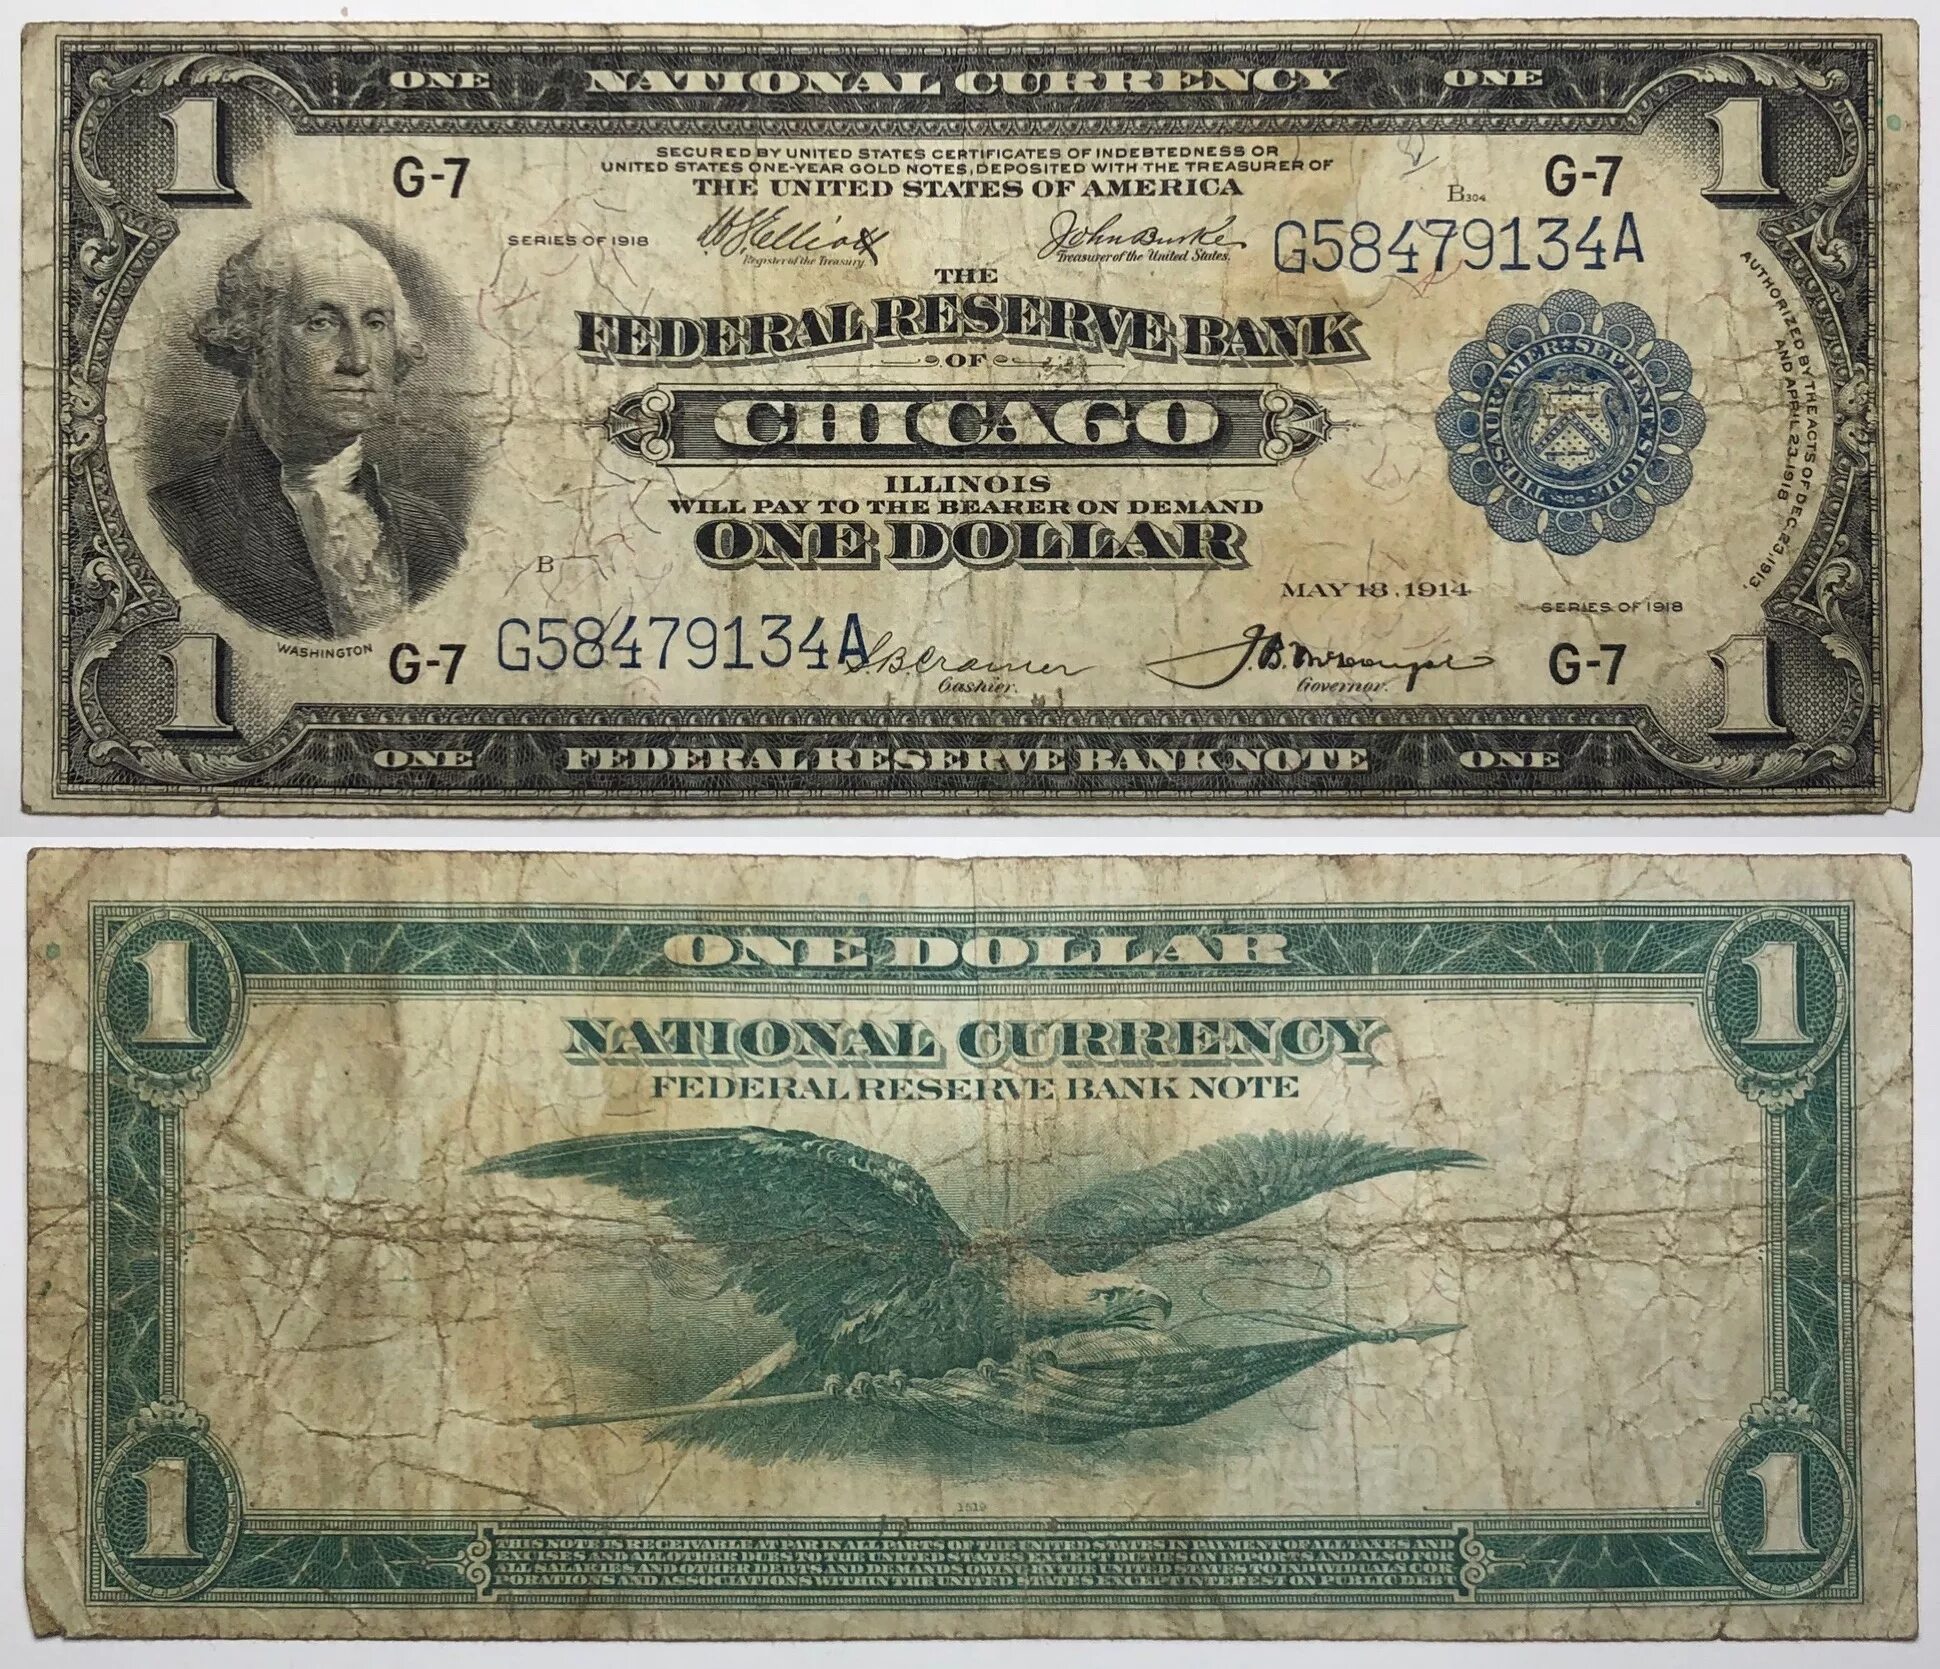 1918 $5,000 Federal Reserve Note. Банкнота 1 доллар. Первые банкноты США. Купюра 1 доллар США. Один доллар сша банкнота